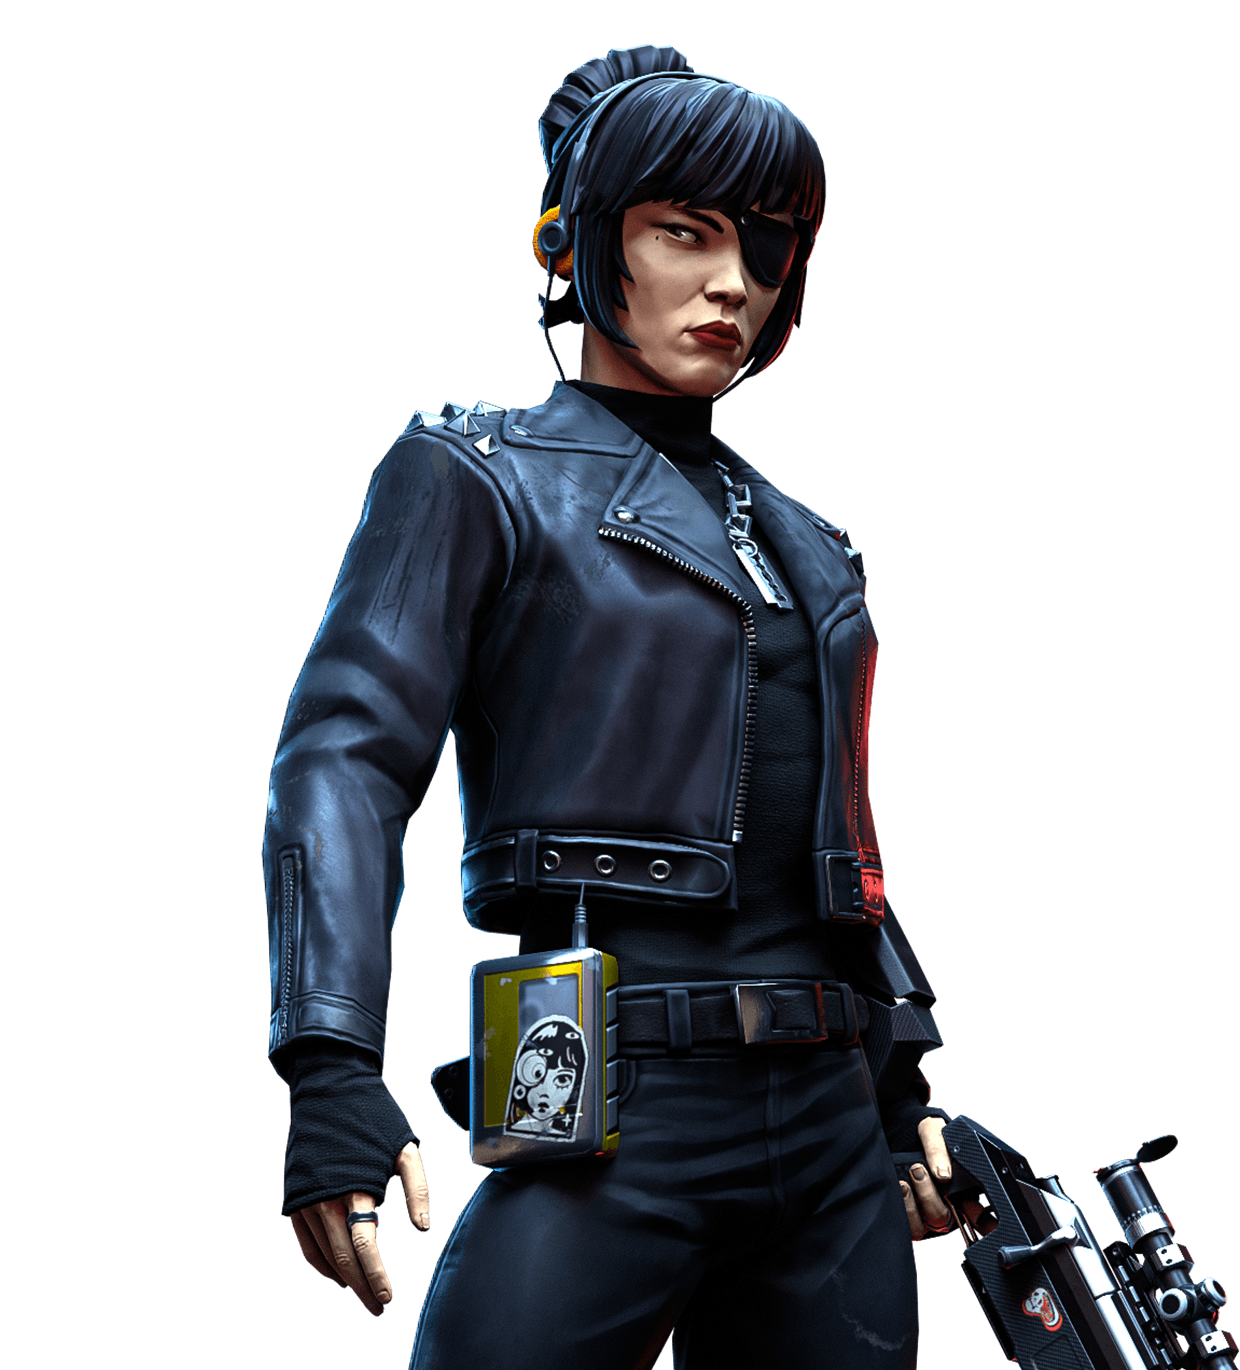 Soji standing and holding her rifle, Raifuru L65 Tactician